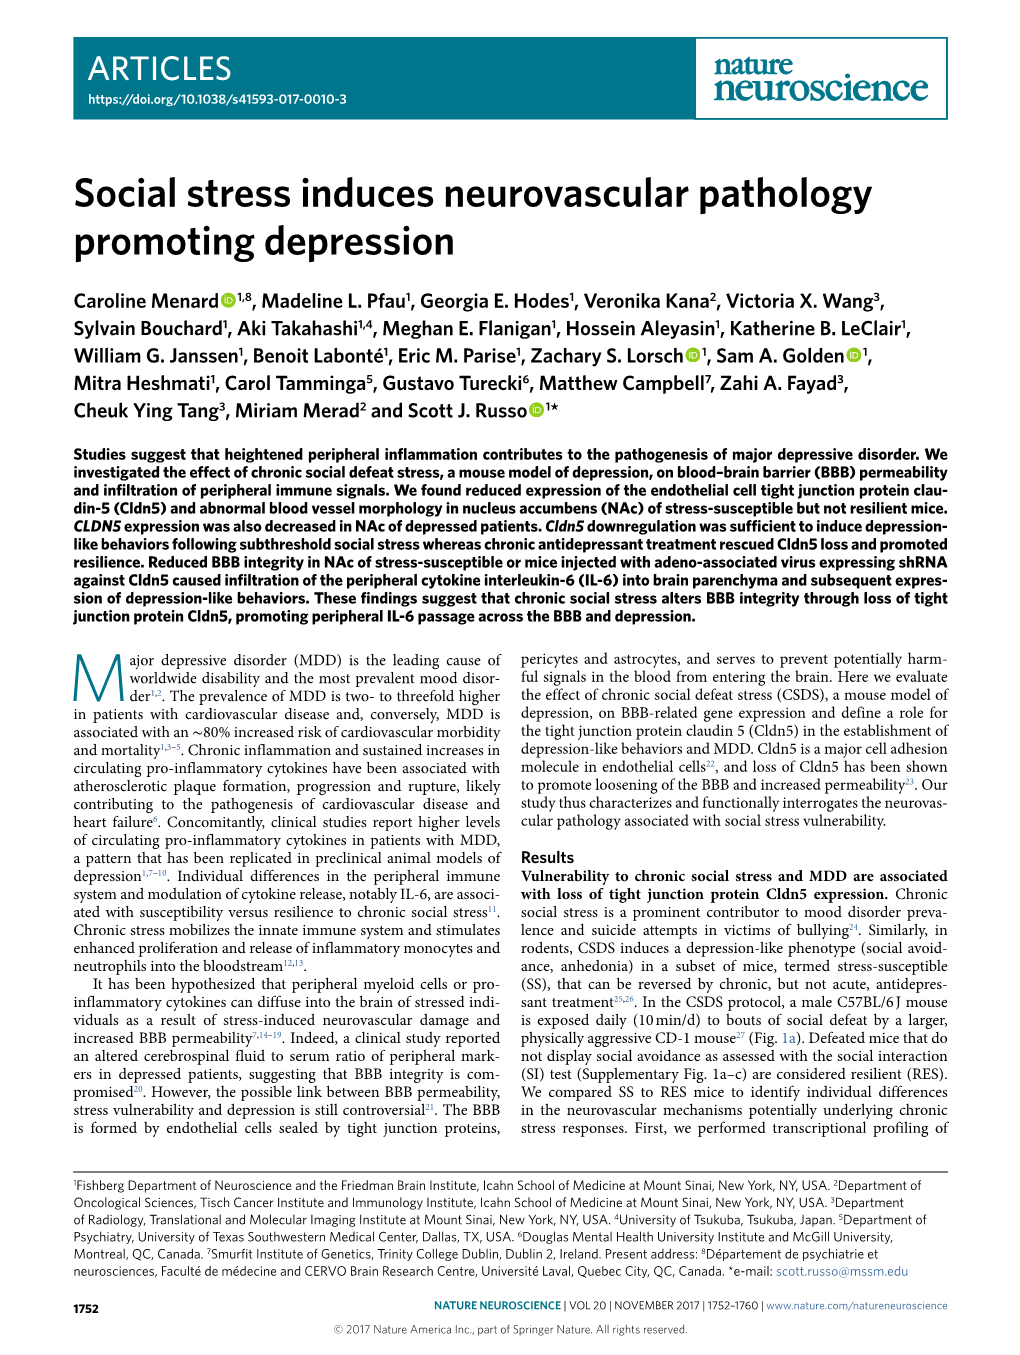 Social Stress Induces Neurovascular Pathology Promoting Depression